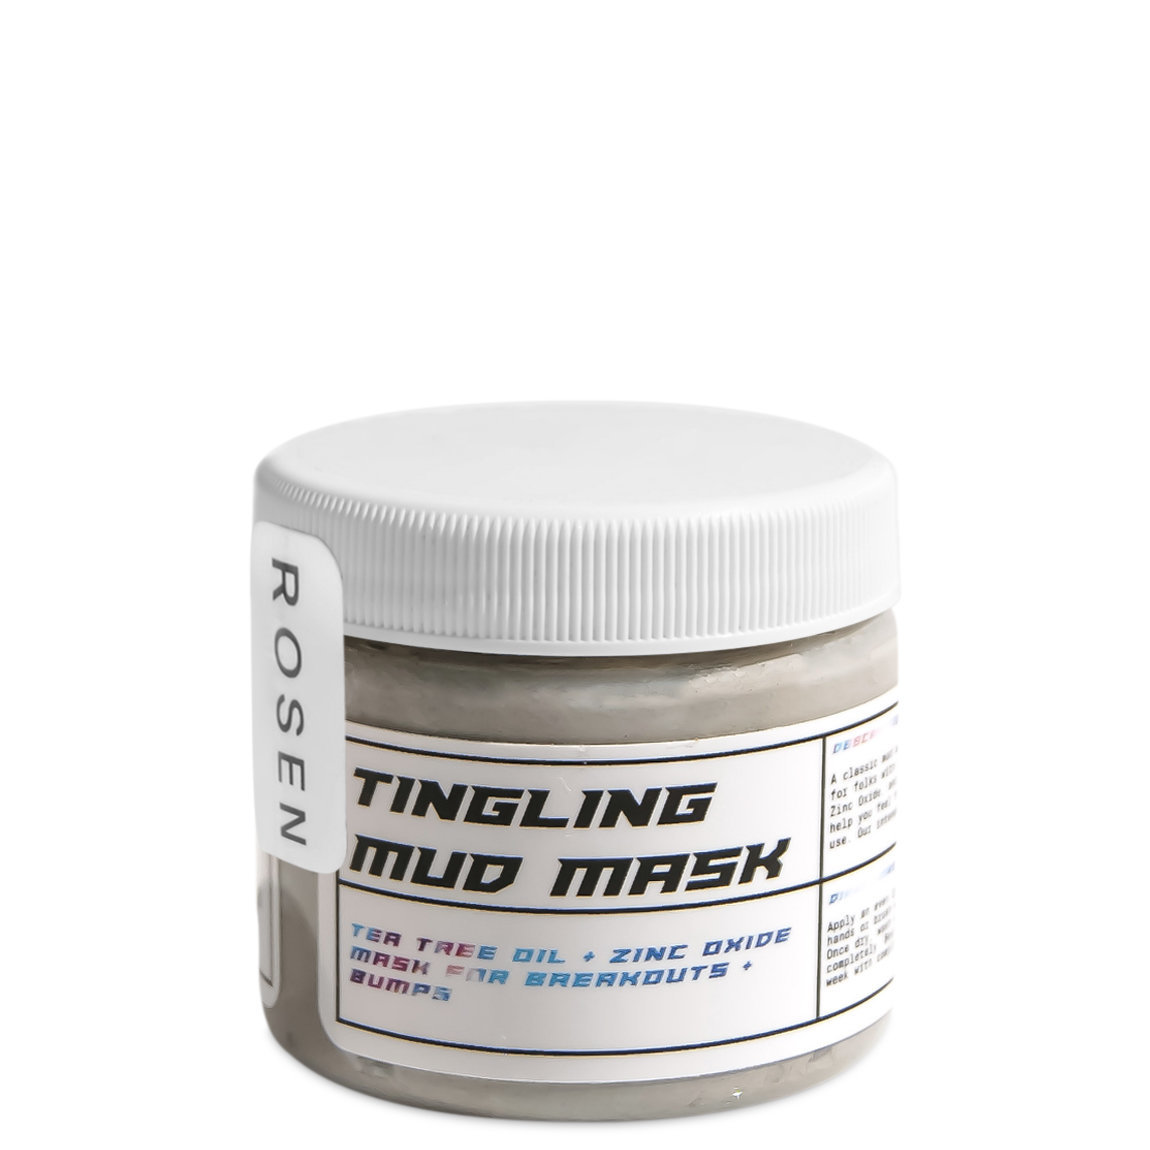 ROSEN Skincare Tingling Mud Mask alternative view 1 - product swatch.